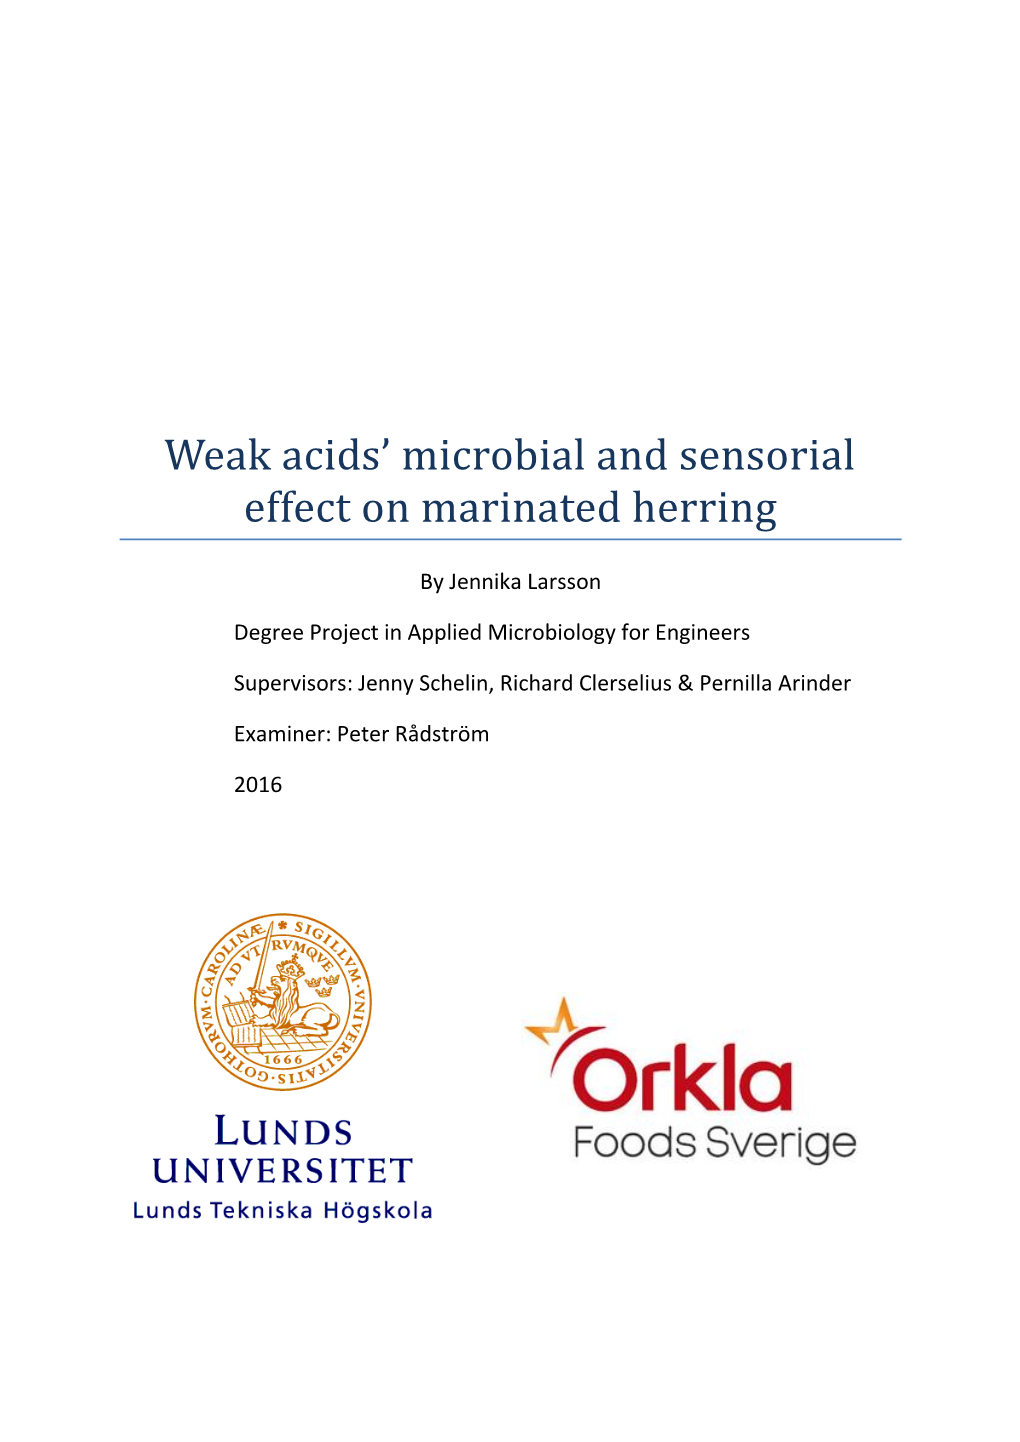 Weak Acids' Microbial and Sensorial Effect on Marinated Herring